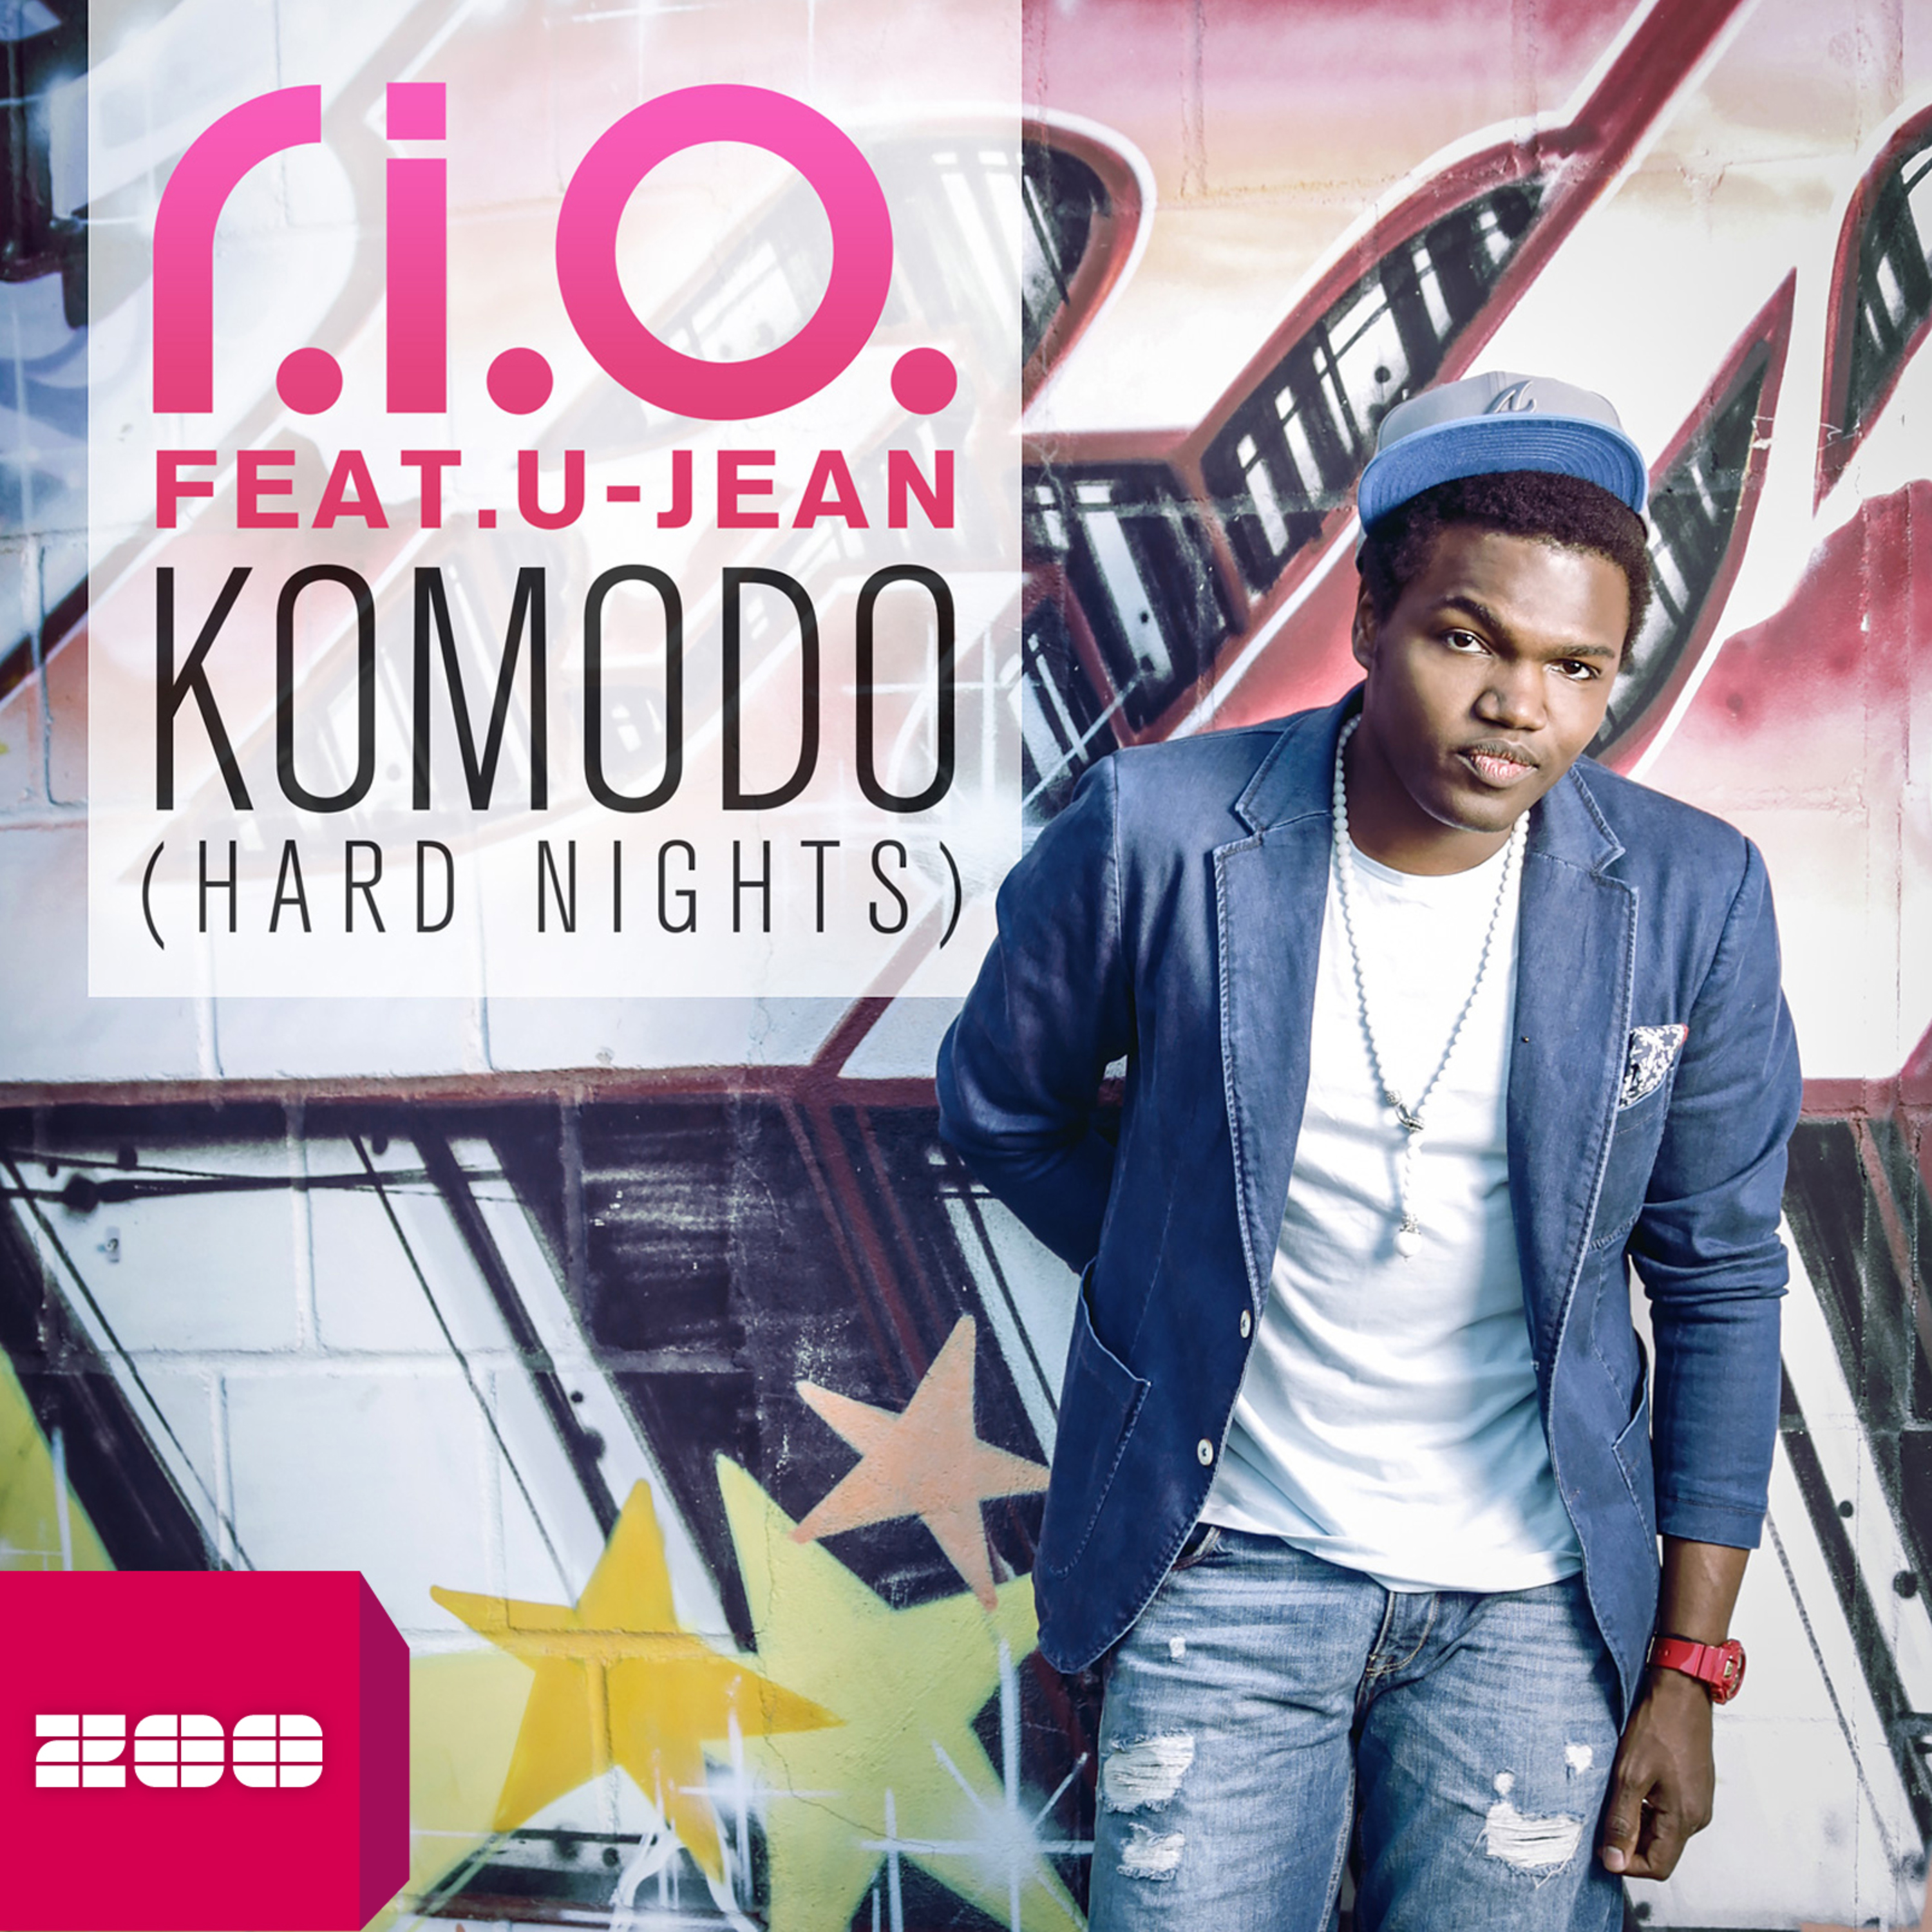 Komodo (Hard Nights) (Video Edit)